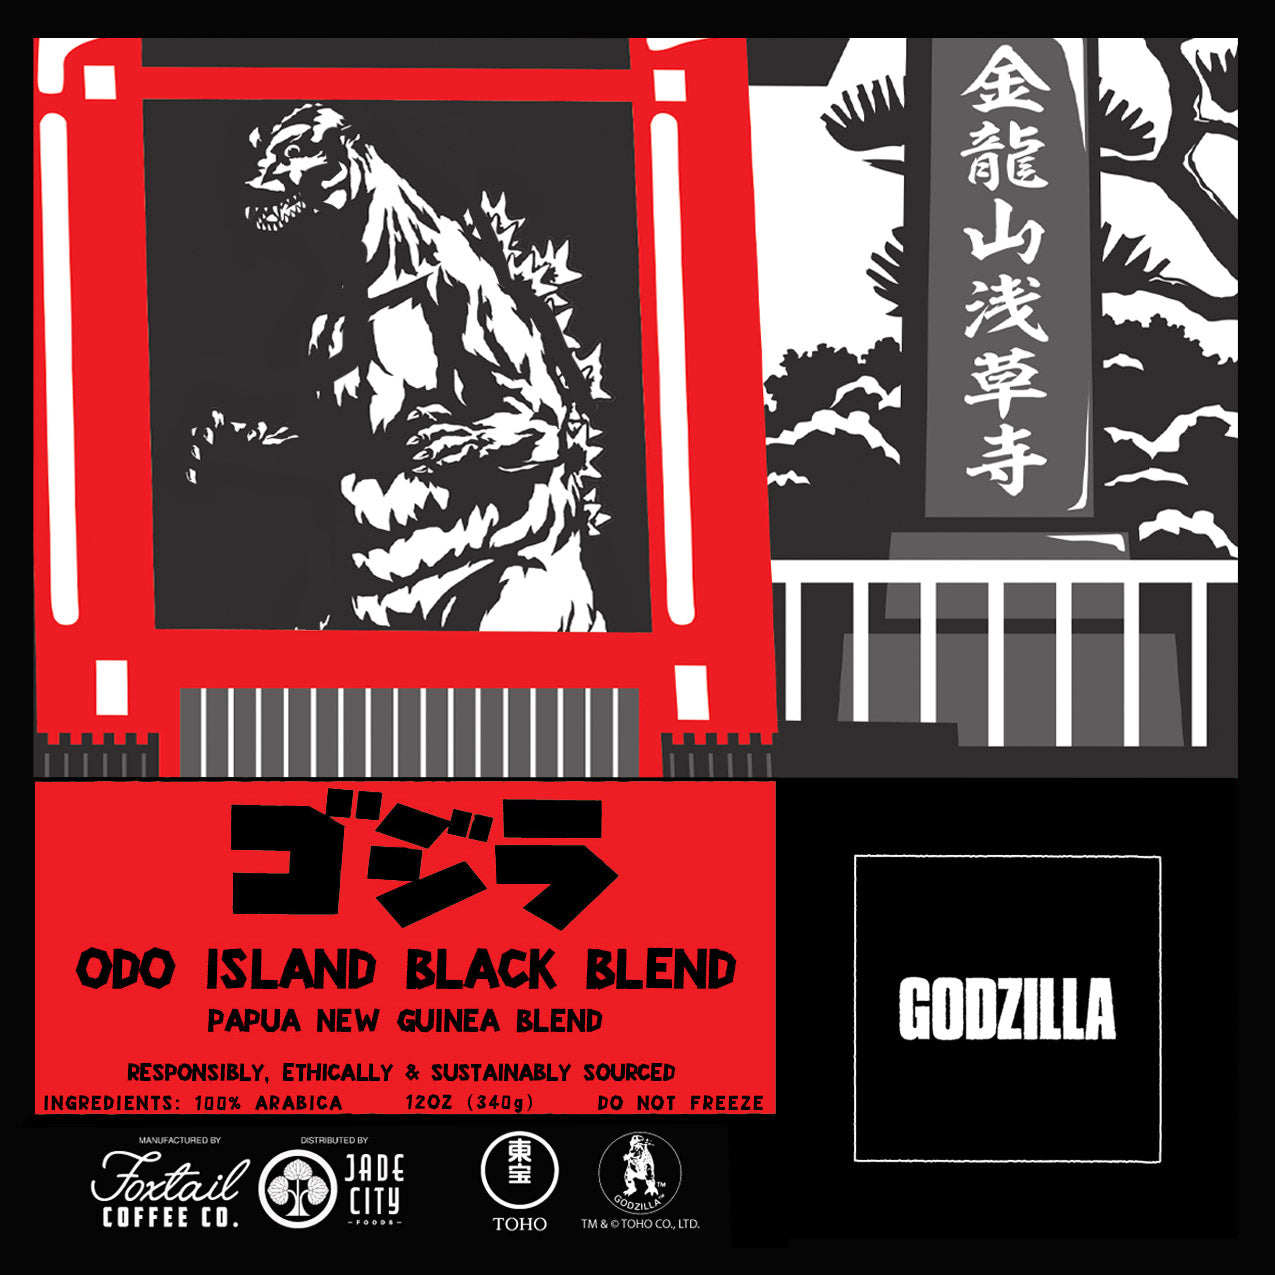 Godzilla's Odo Island Black Blend